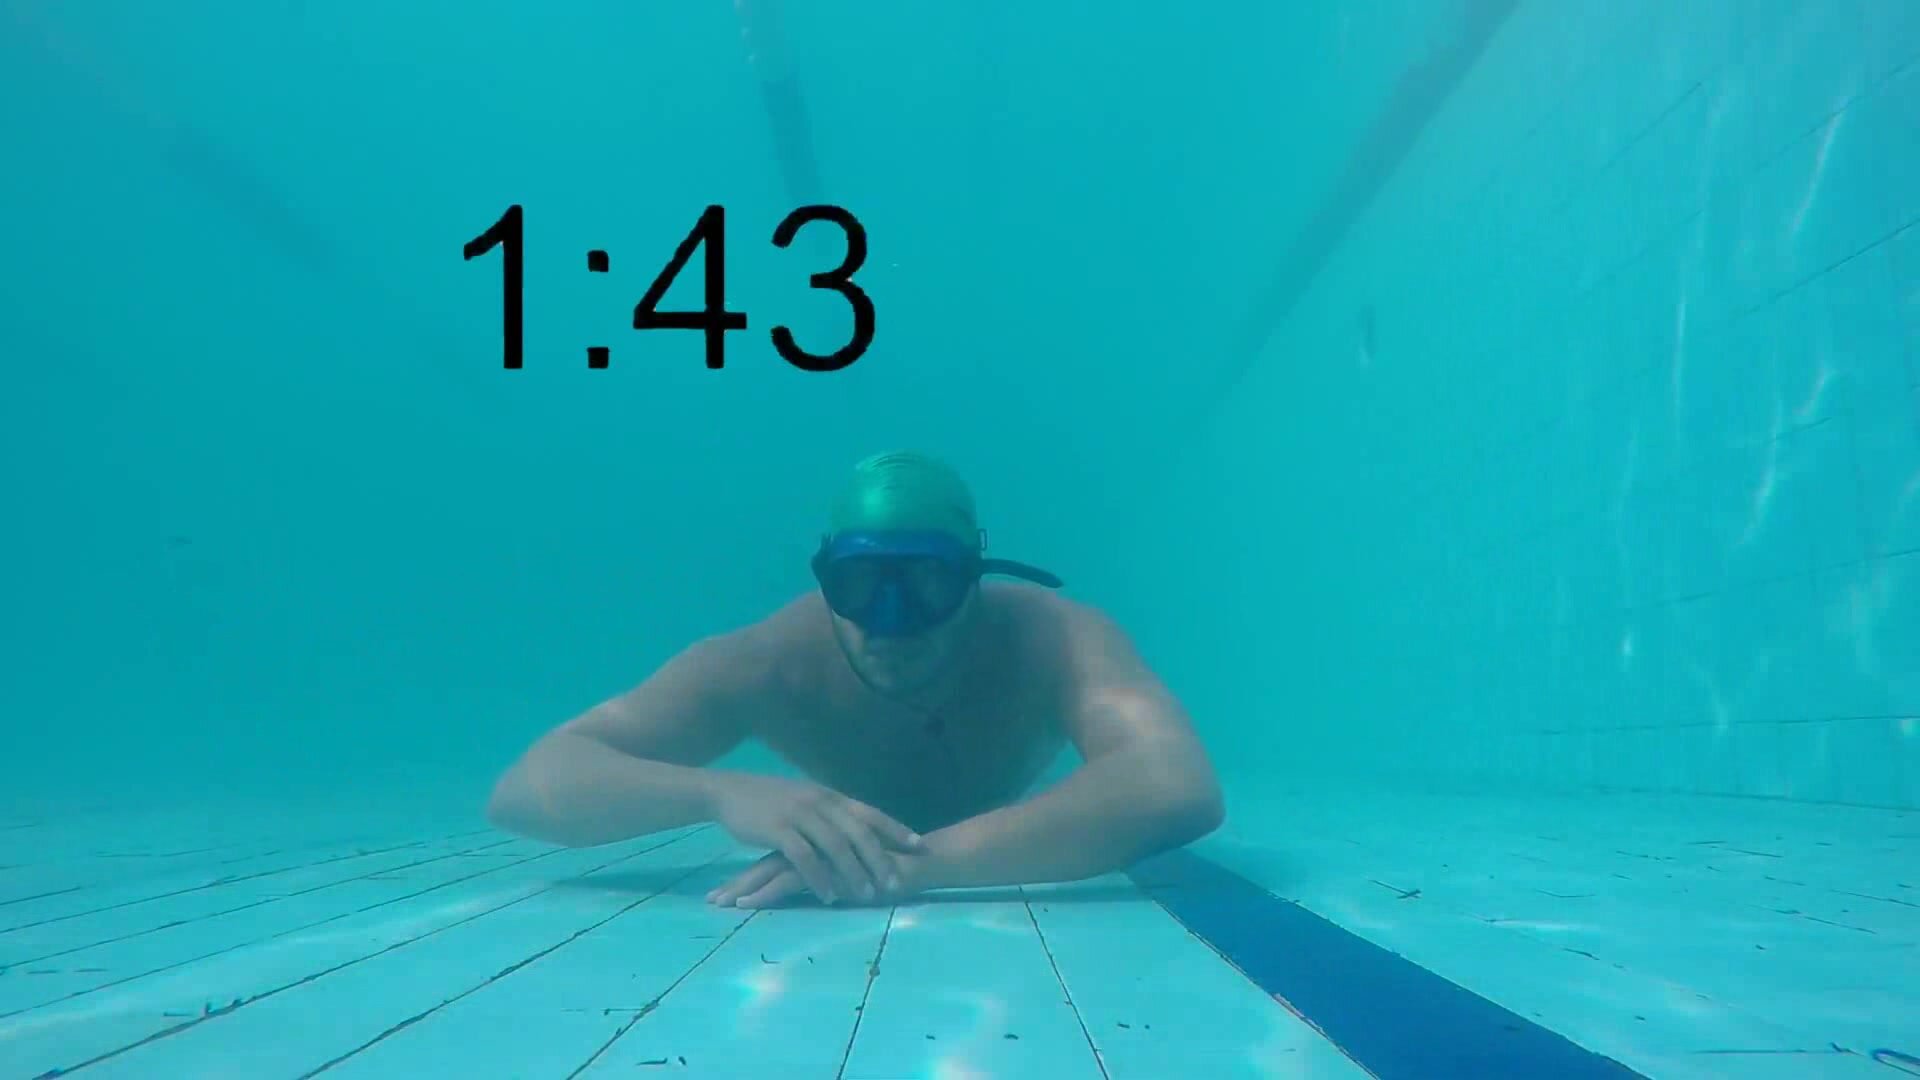 Kareem breatholding over two minutes underwater